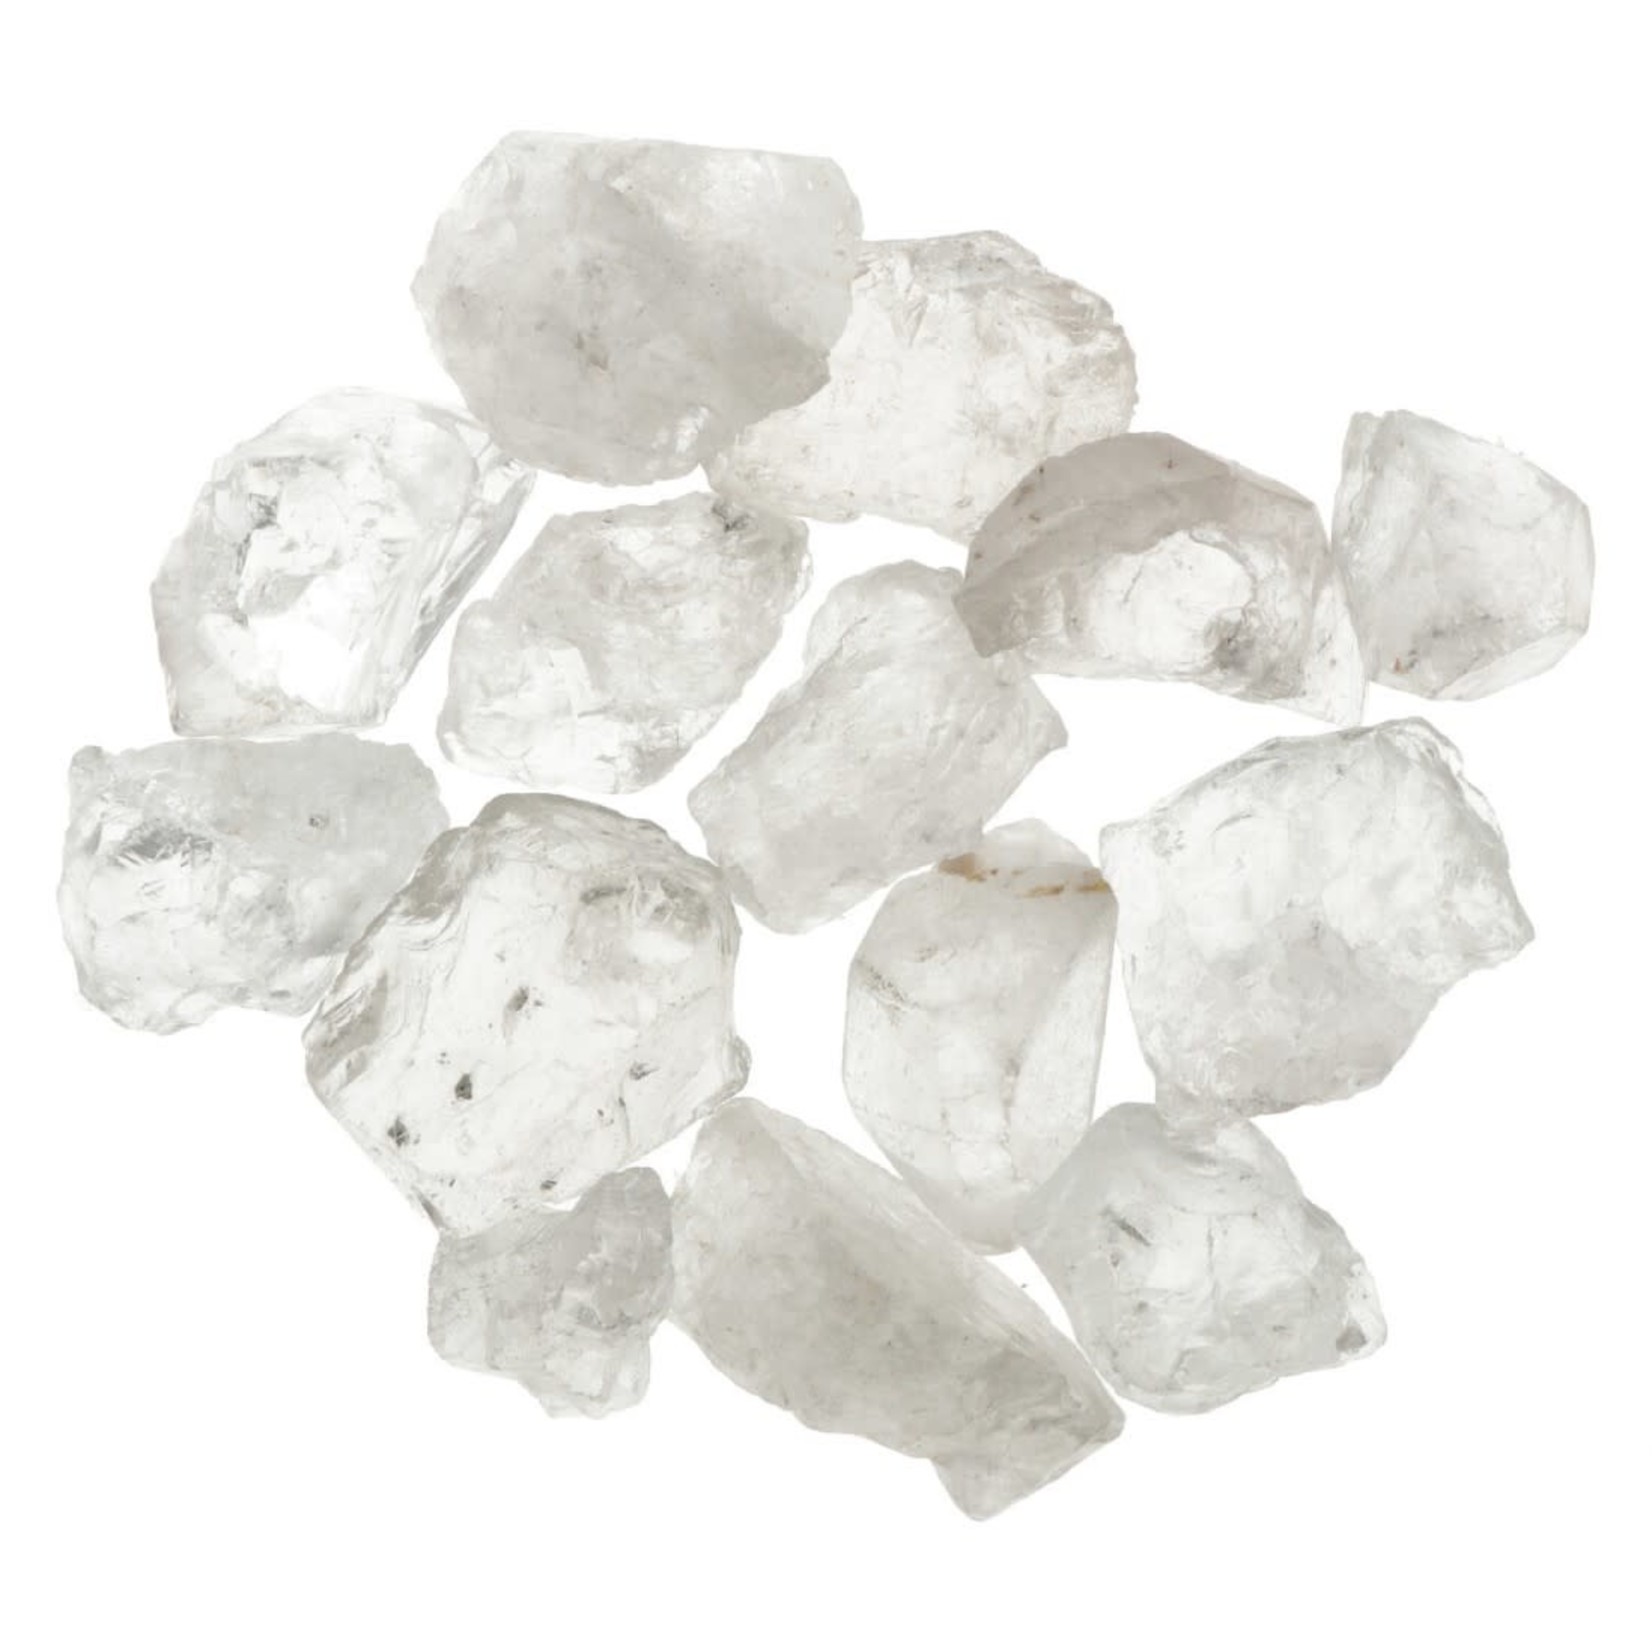 Bergkristal Ruwe Brokken (80-100 gram), per stuk